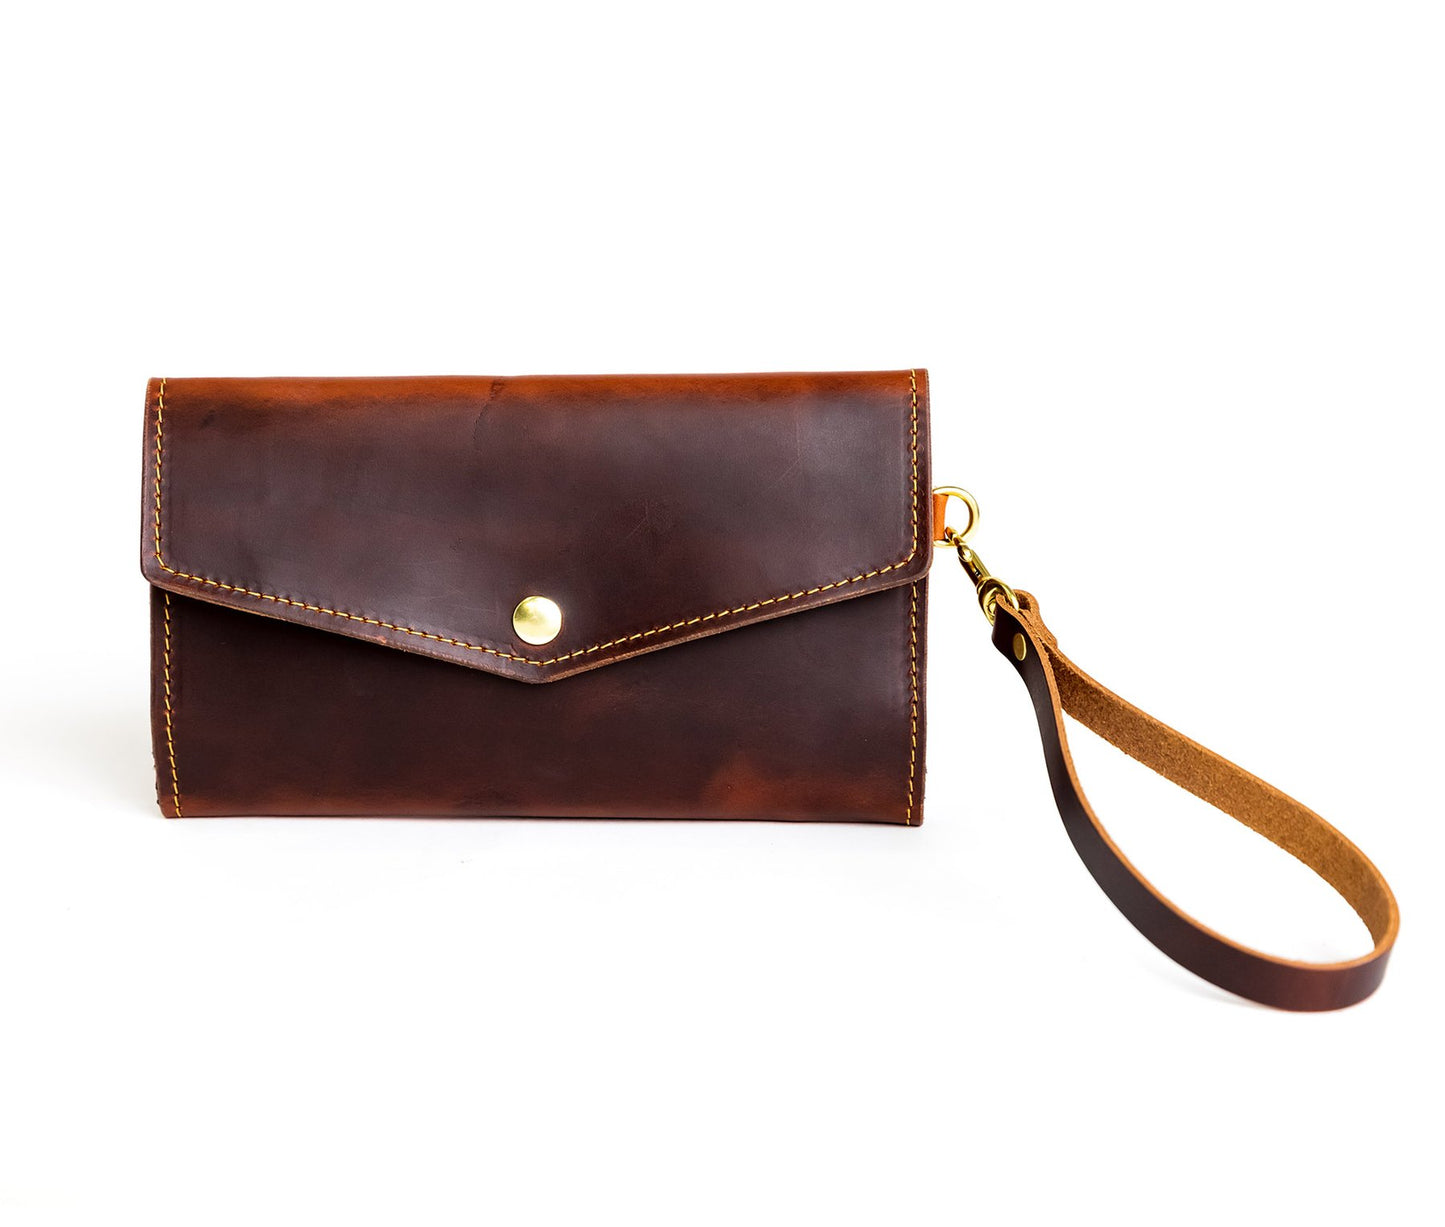 Lifetime Leather - Leather Women's Clutch Wallet